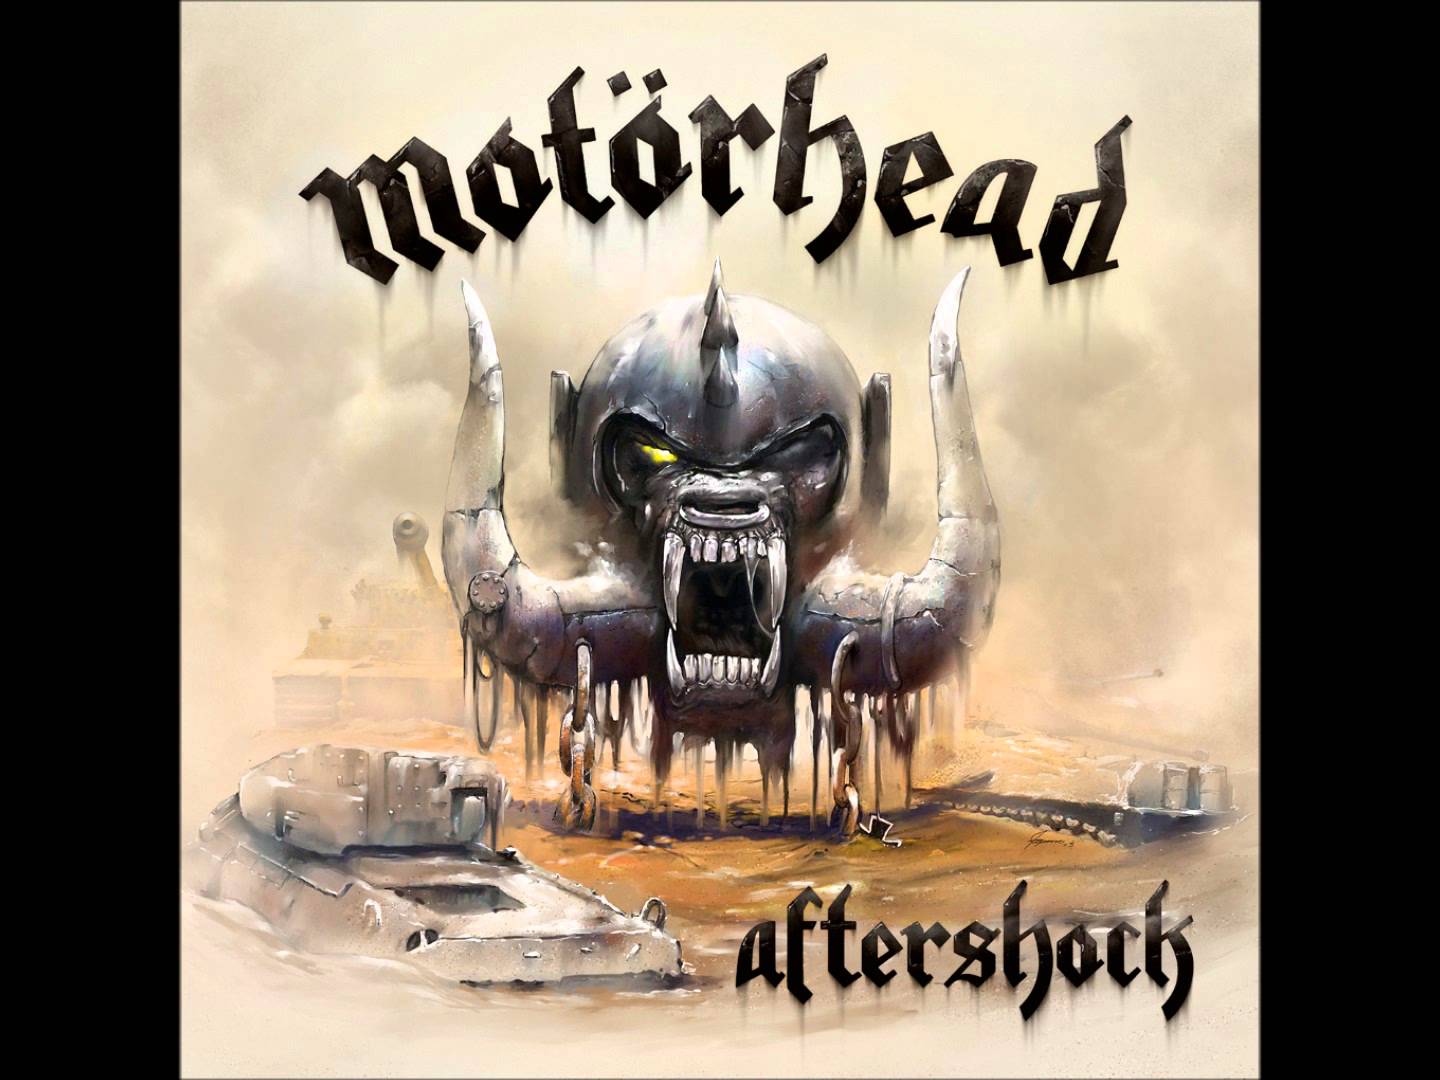 MOTORHEAD – 2 brand new tracks online